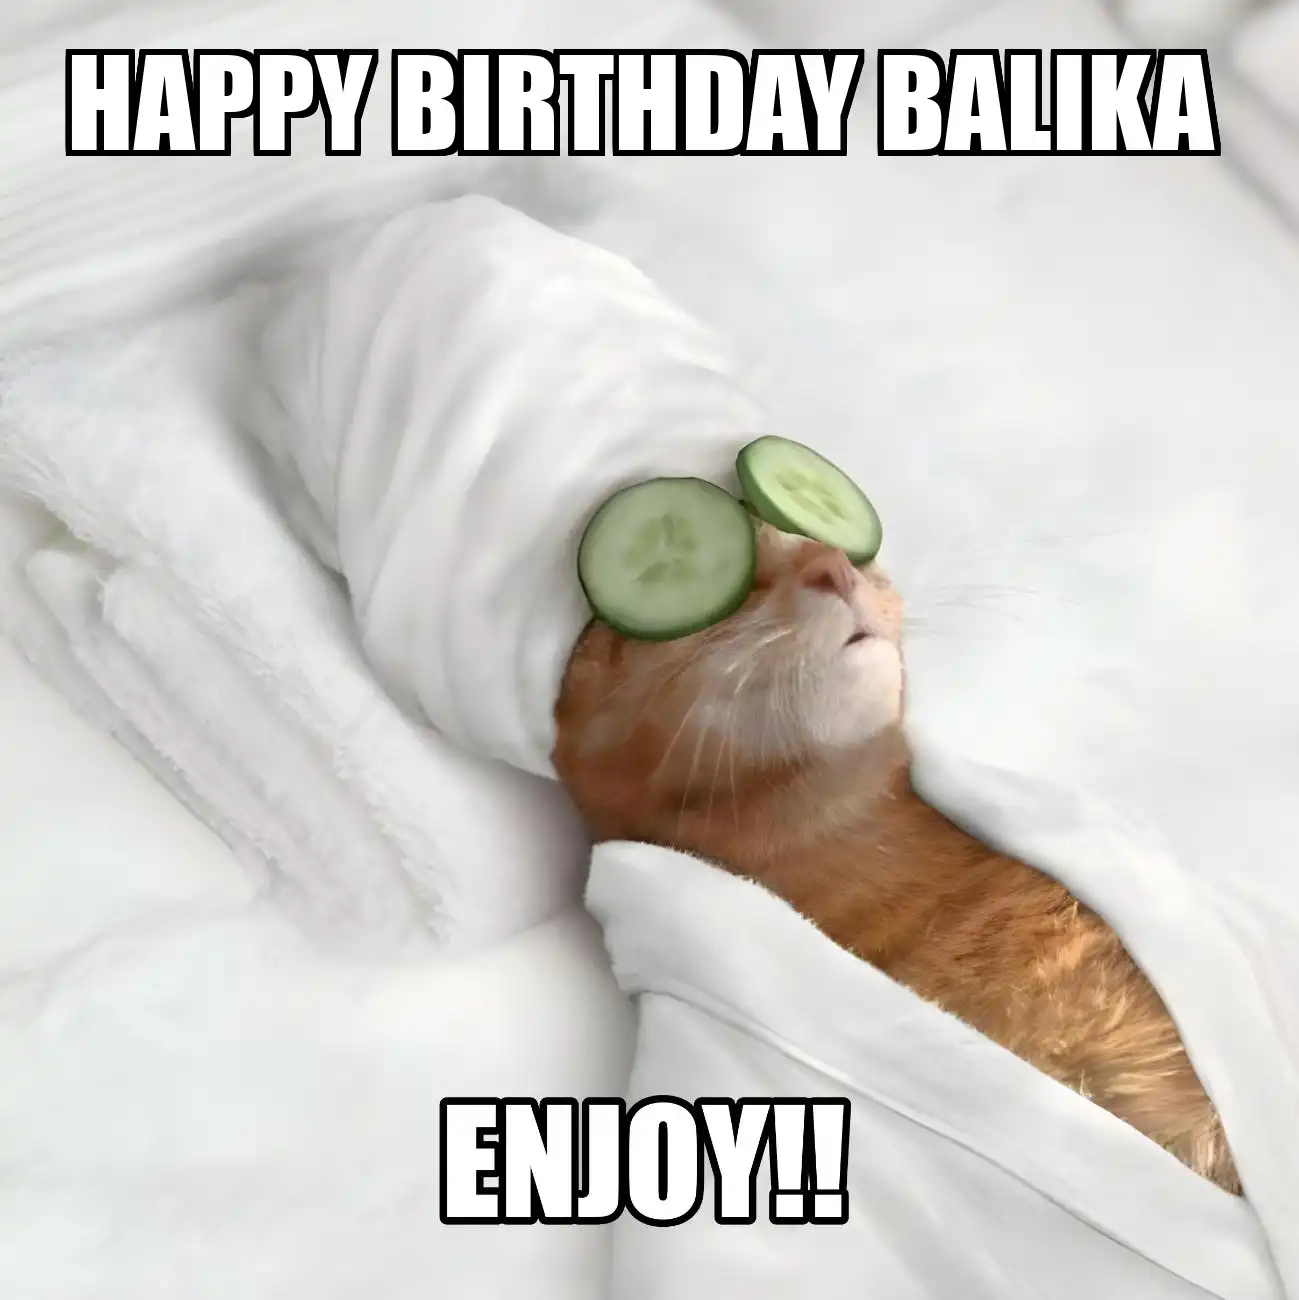 Happy Birthday Balika Enjoy Cat Meme